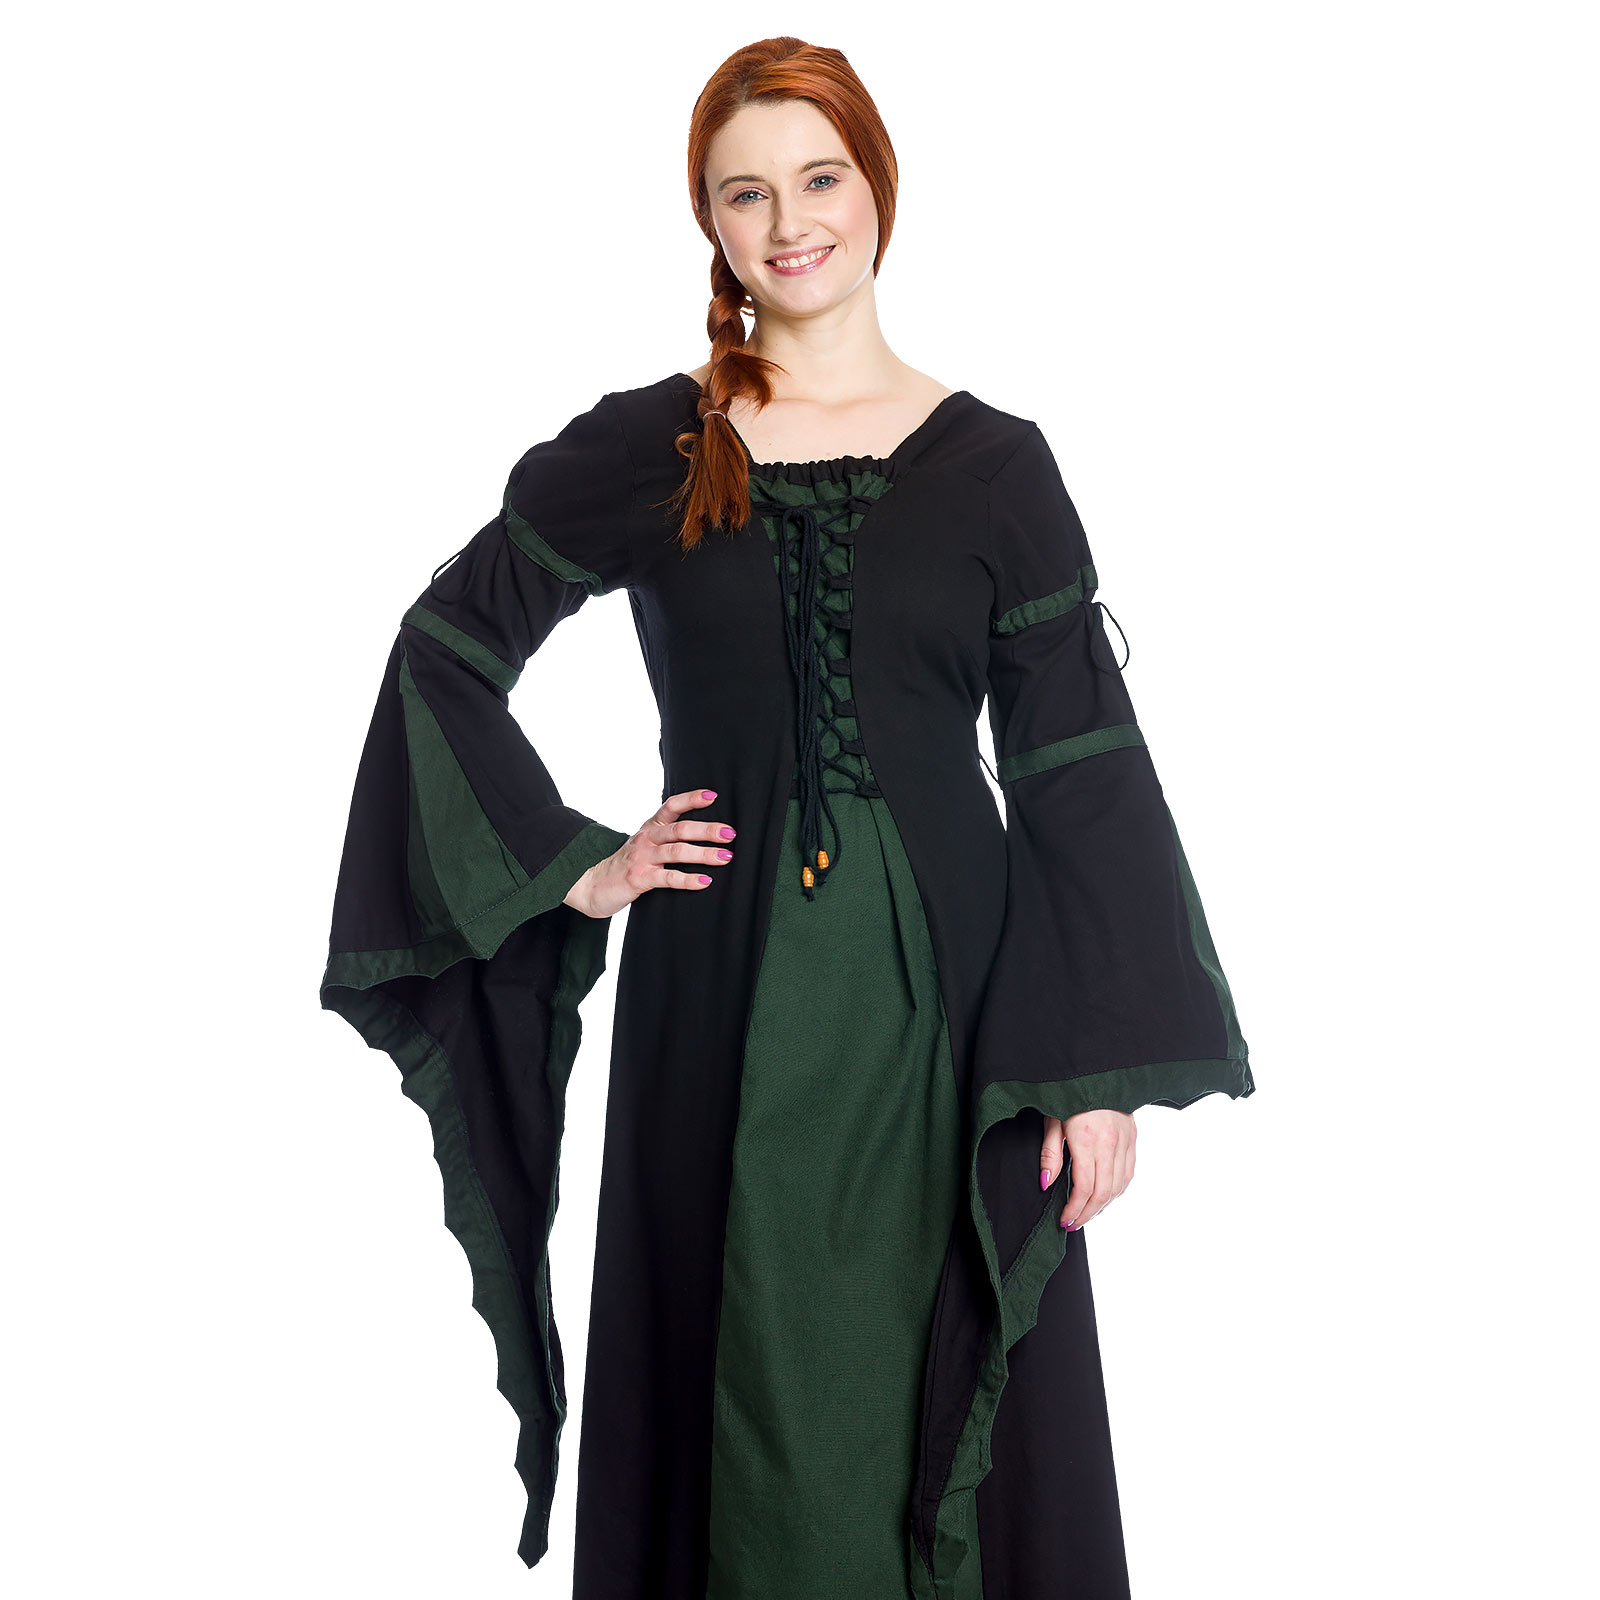 Leona - Middeleeuwse jurk zwart-groen